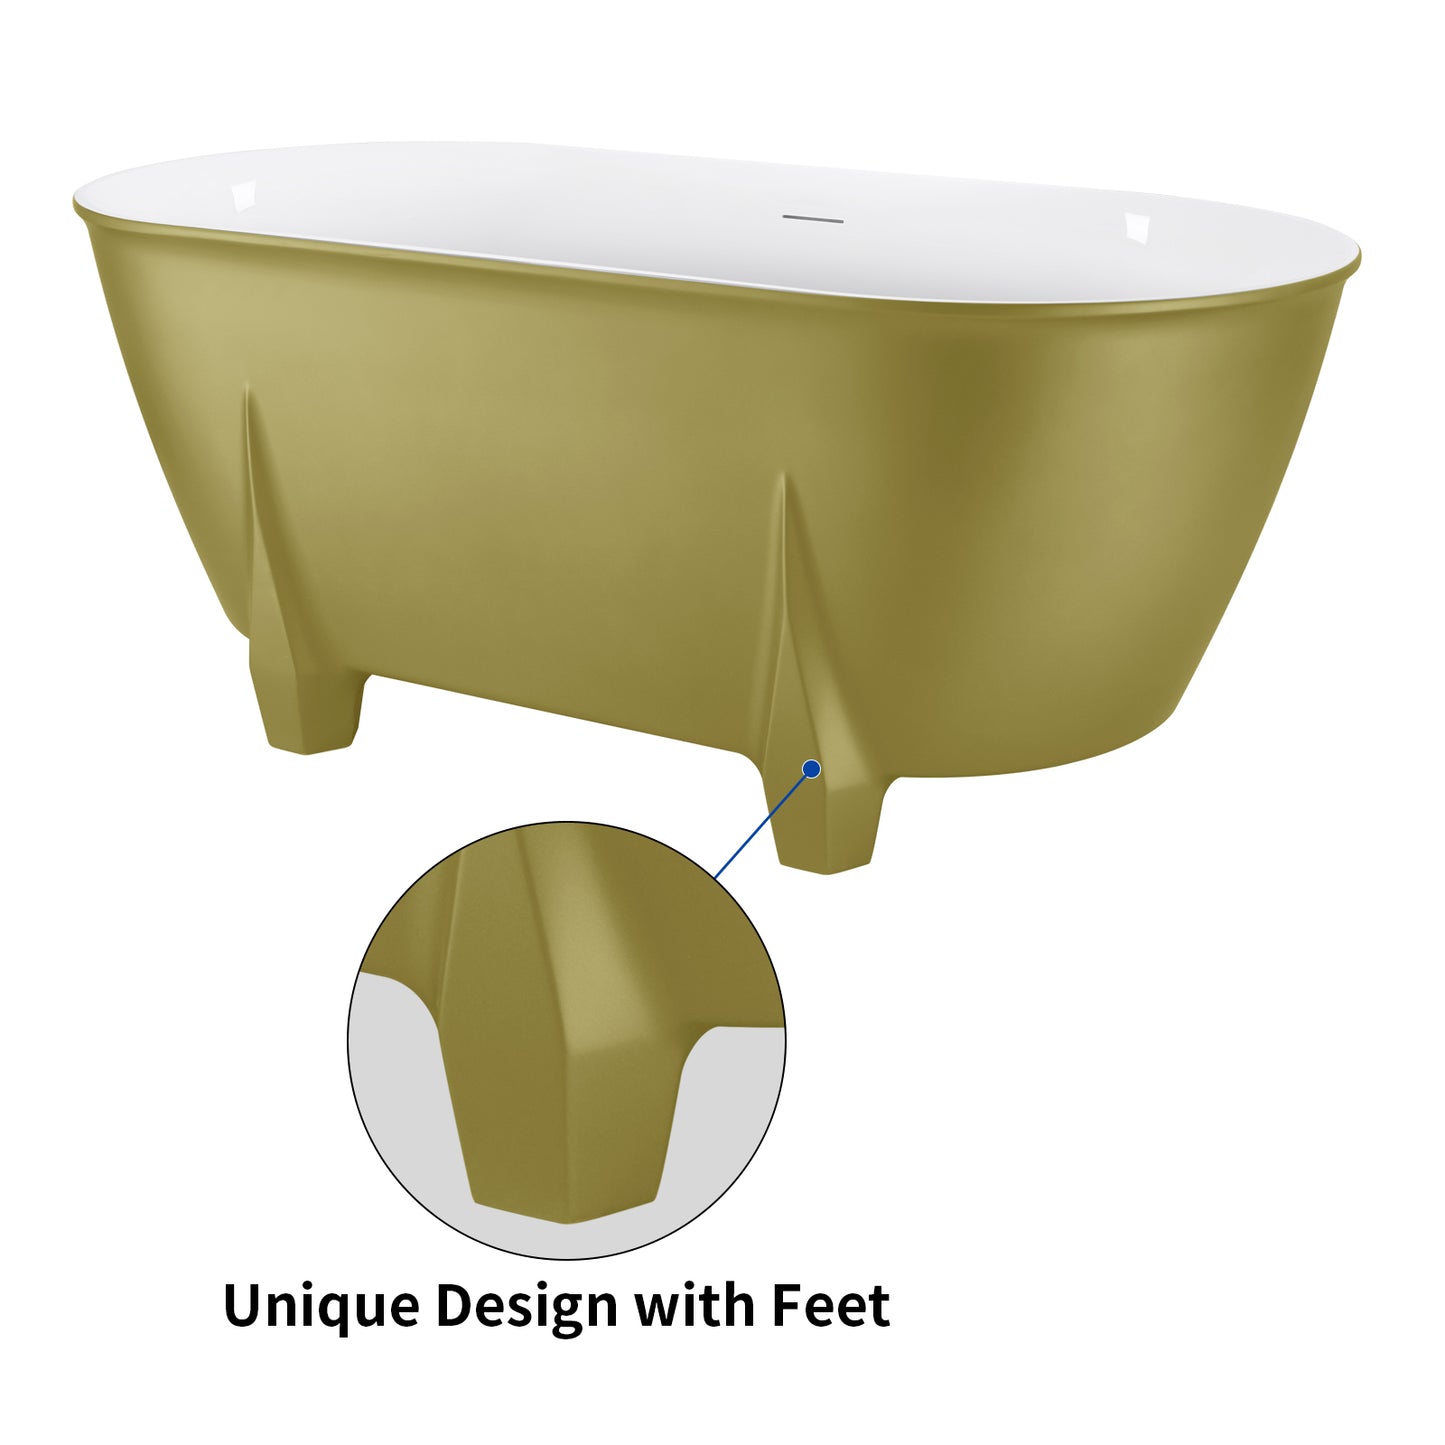 59" 100% Acrylic Freestanding Bathtub，Contemporary Soaking Tub，White inside and gold outside，Four corner bathtub